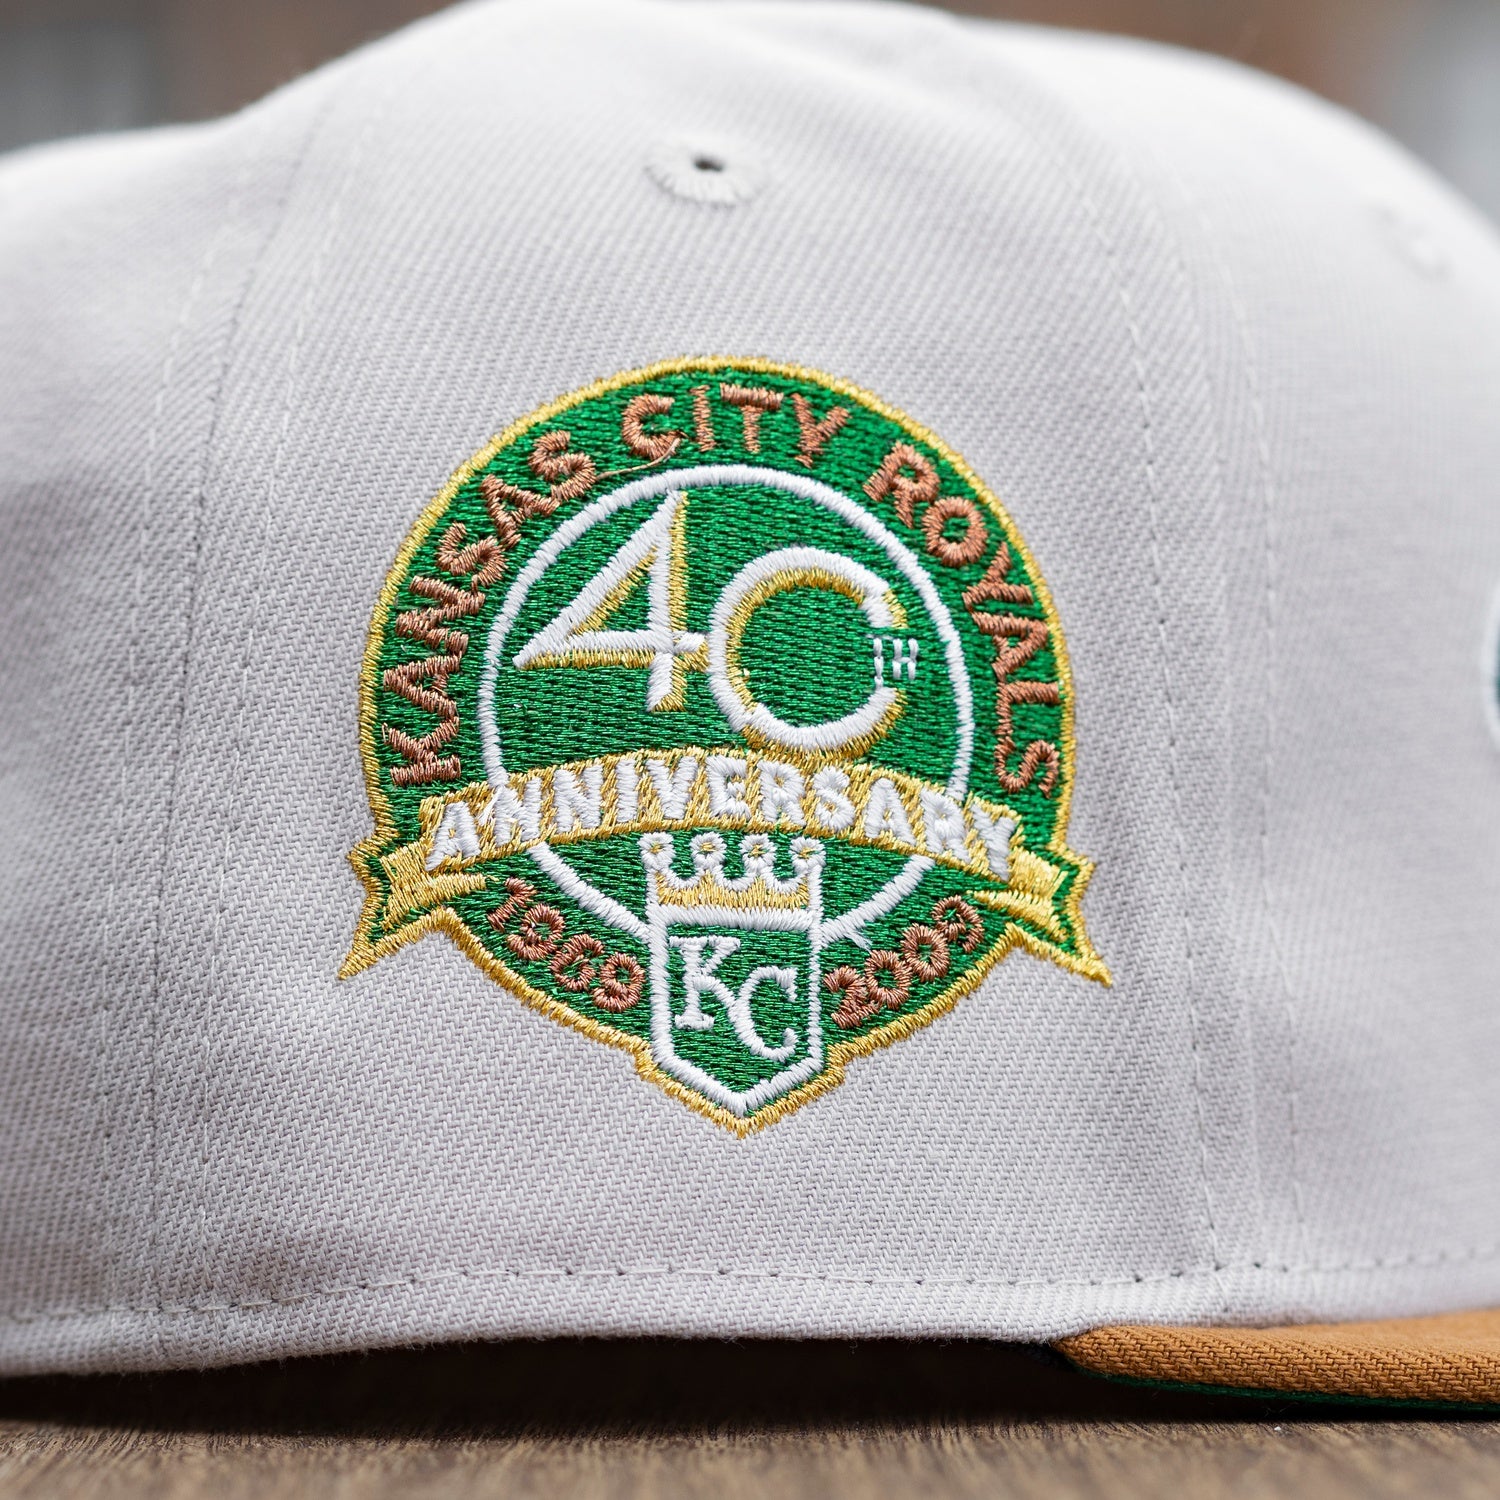 NEW ERA 59FIFTY MLB KANSAS CITY ROYALS 40TH ANNIVERSARY TWO TONE / KELLY GREEN UV FITTED CAP